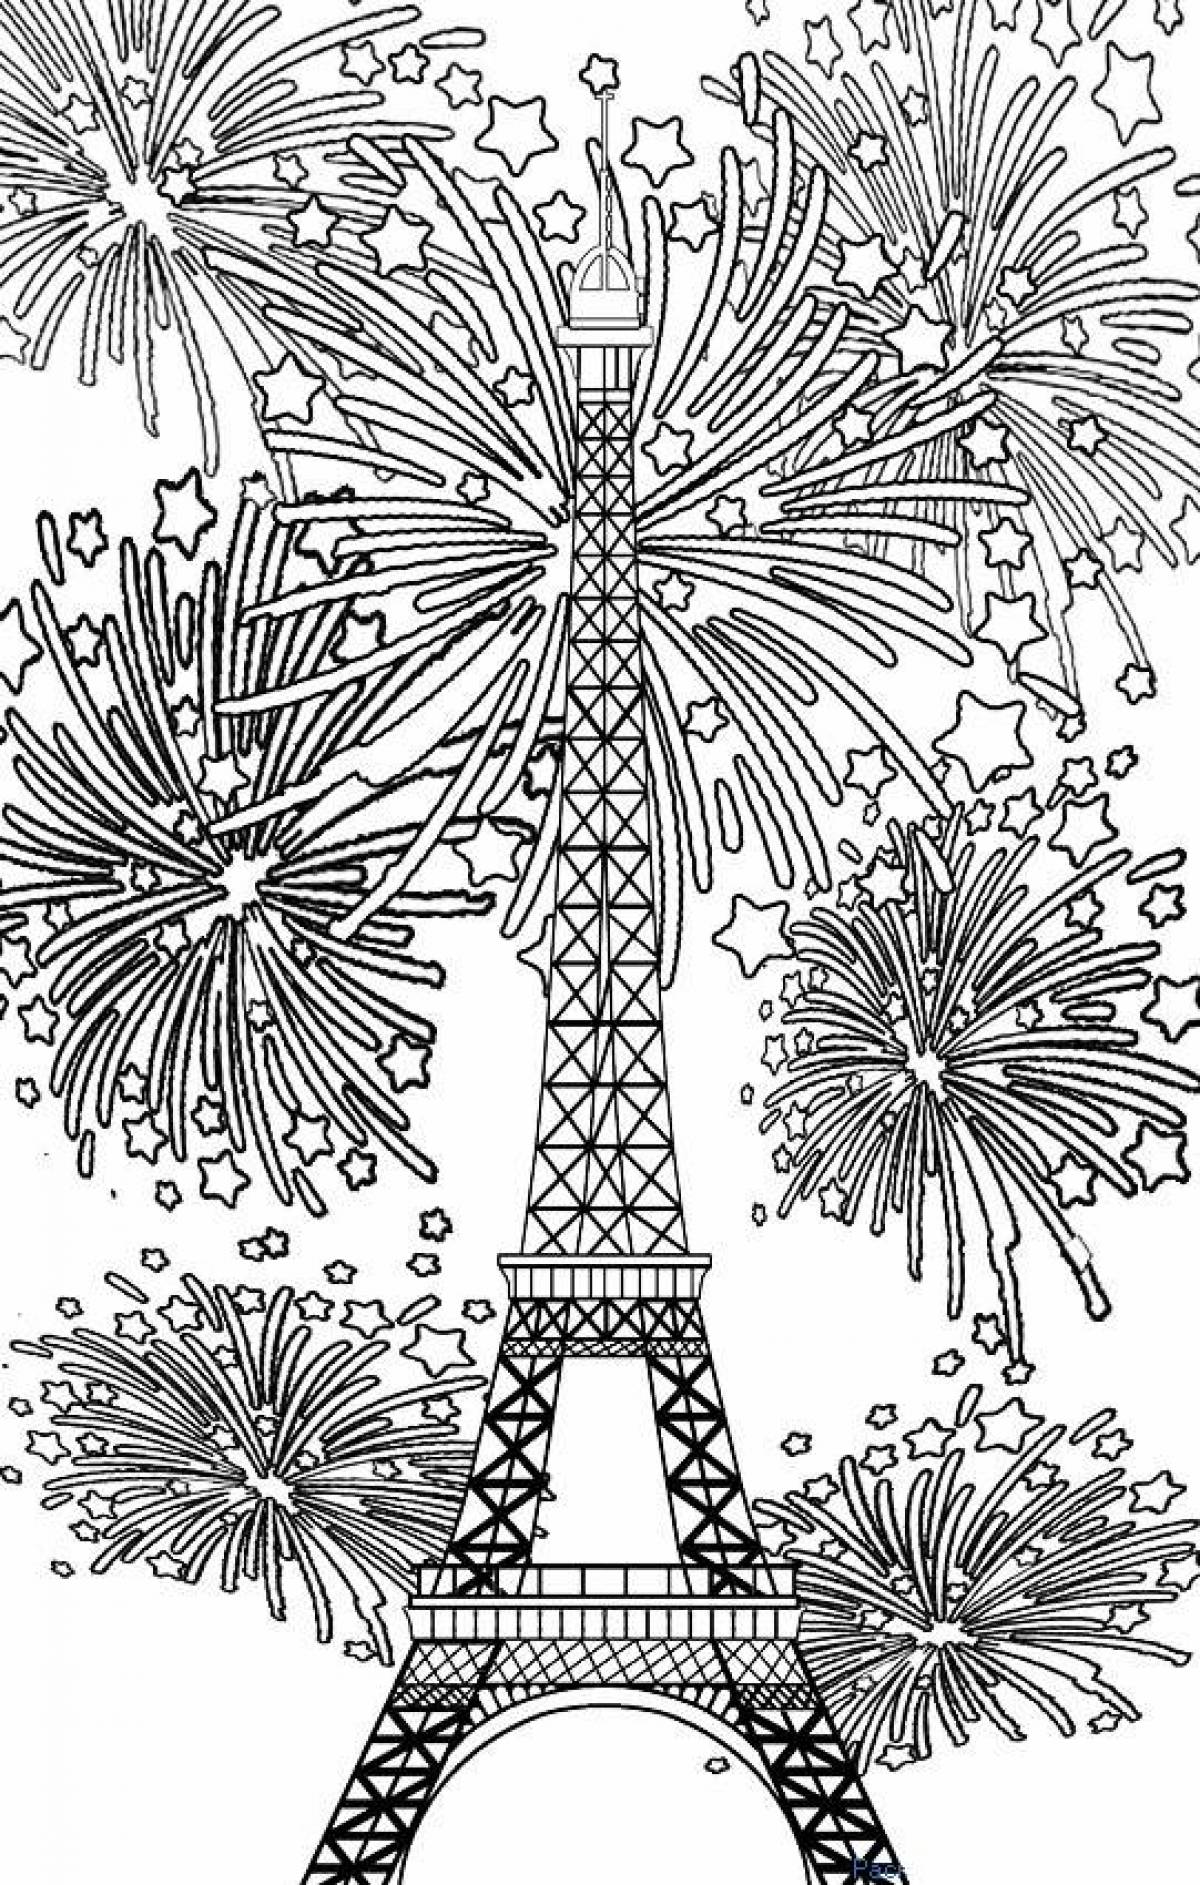 Fireworks over paris